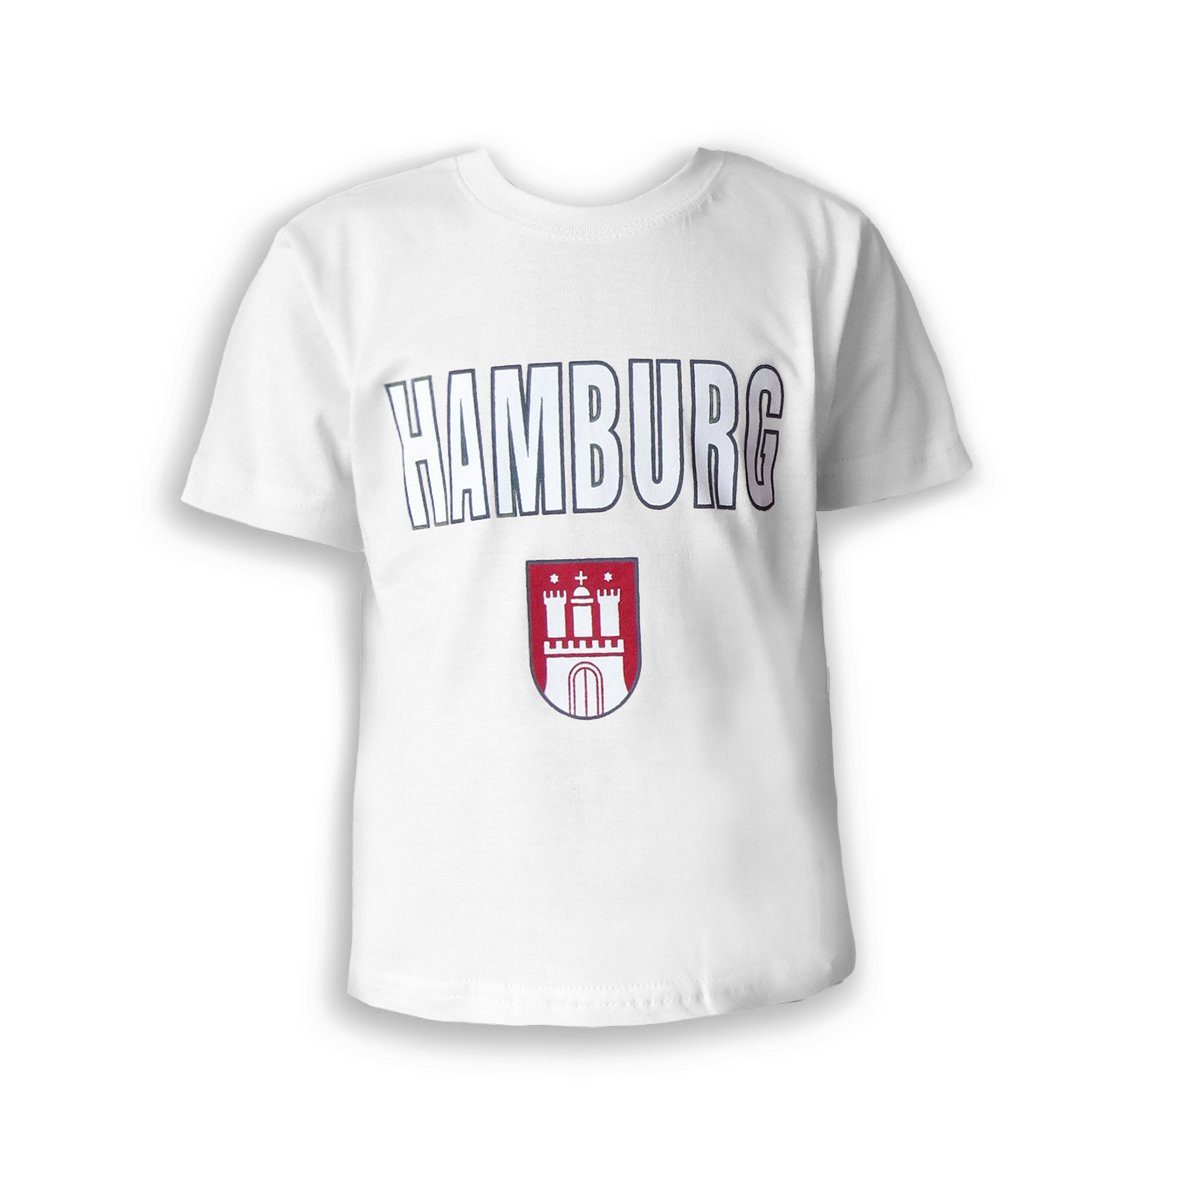 Sonia Originelli T-Shirt Kinder T-Shirt "Hamburg" Classic Wappen Baumwolle